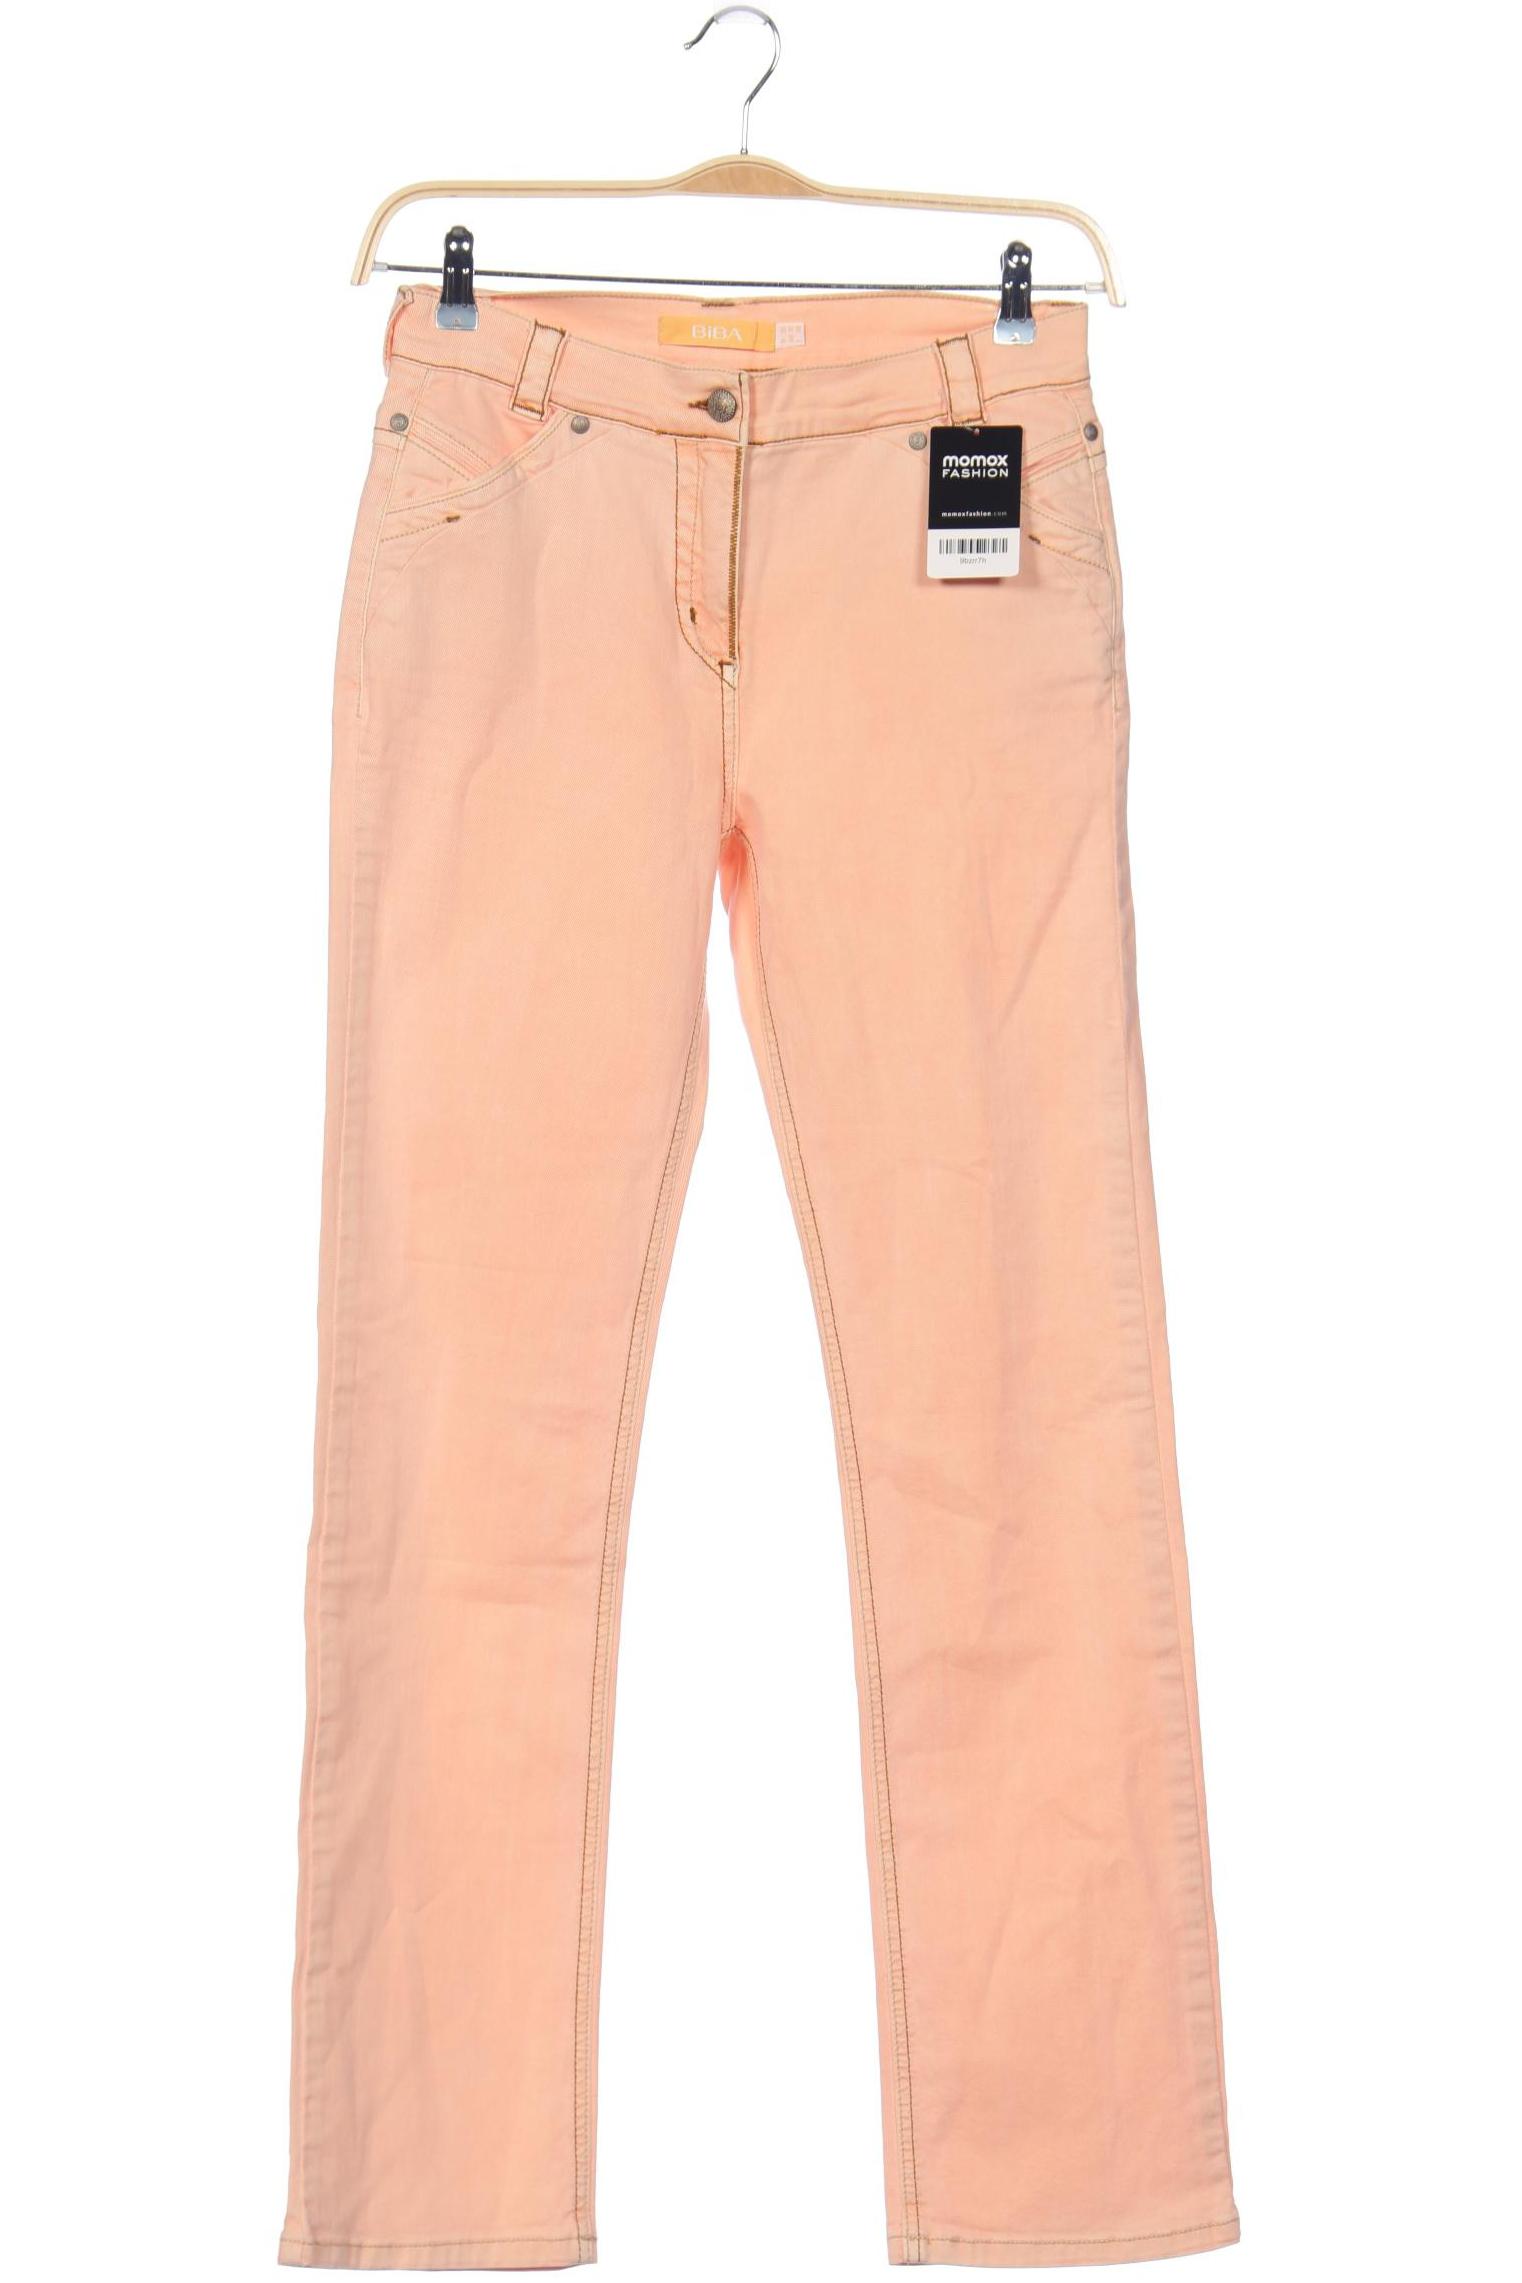 BiBA Damen Jeans, orange von BiBA